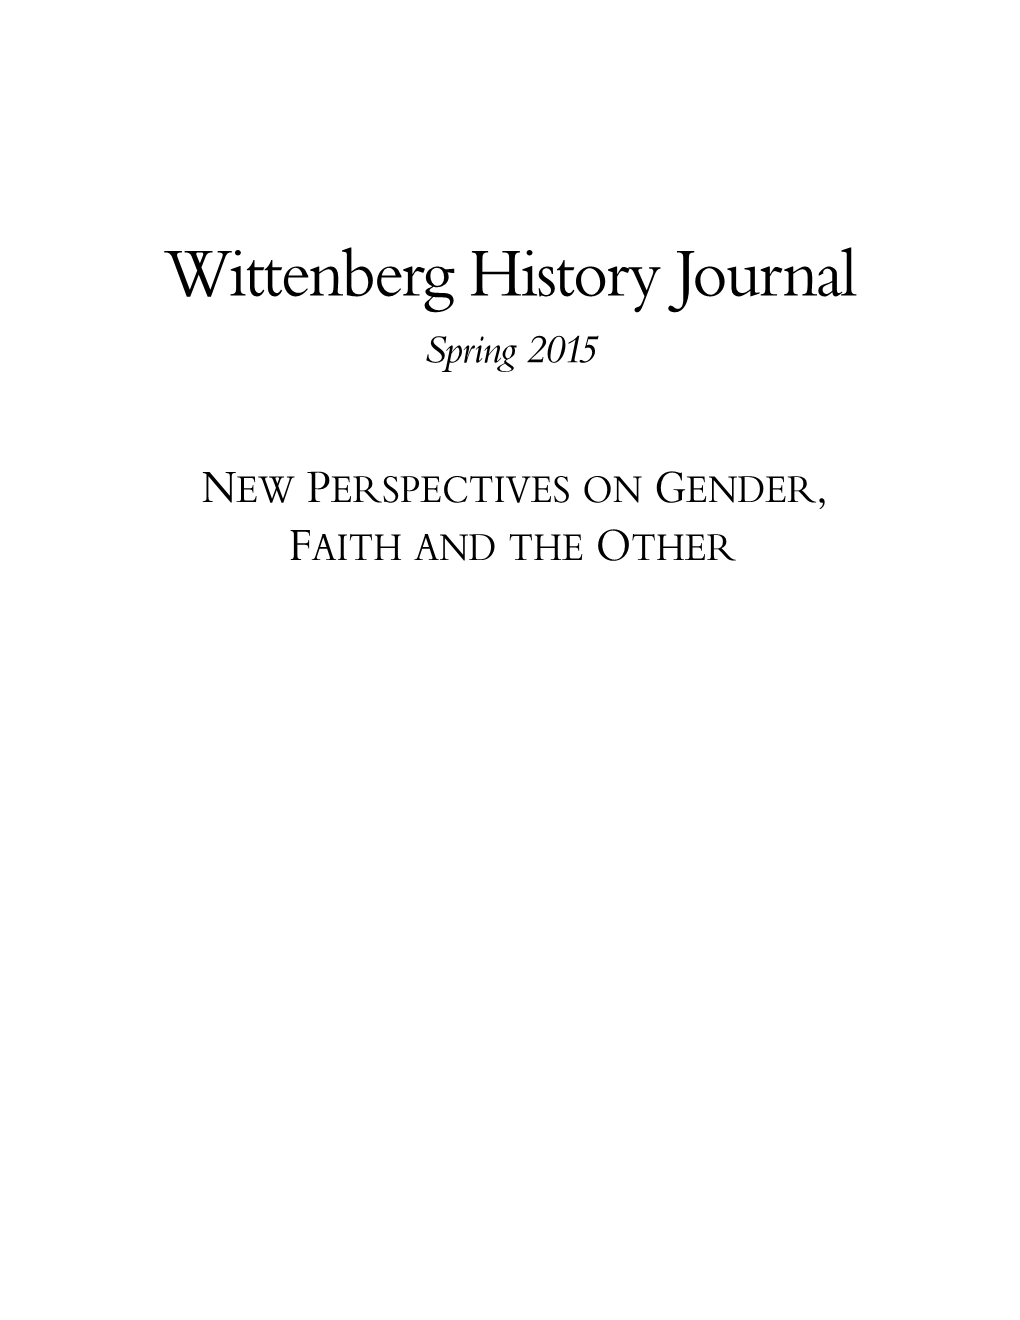 Wittenberg History Journal Spring 2015